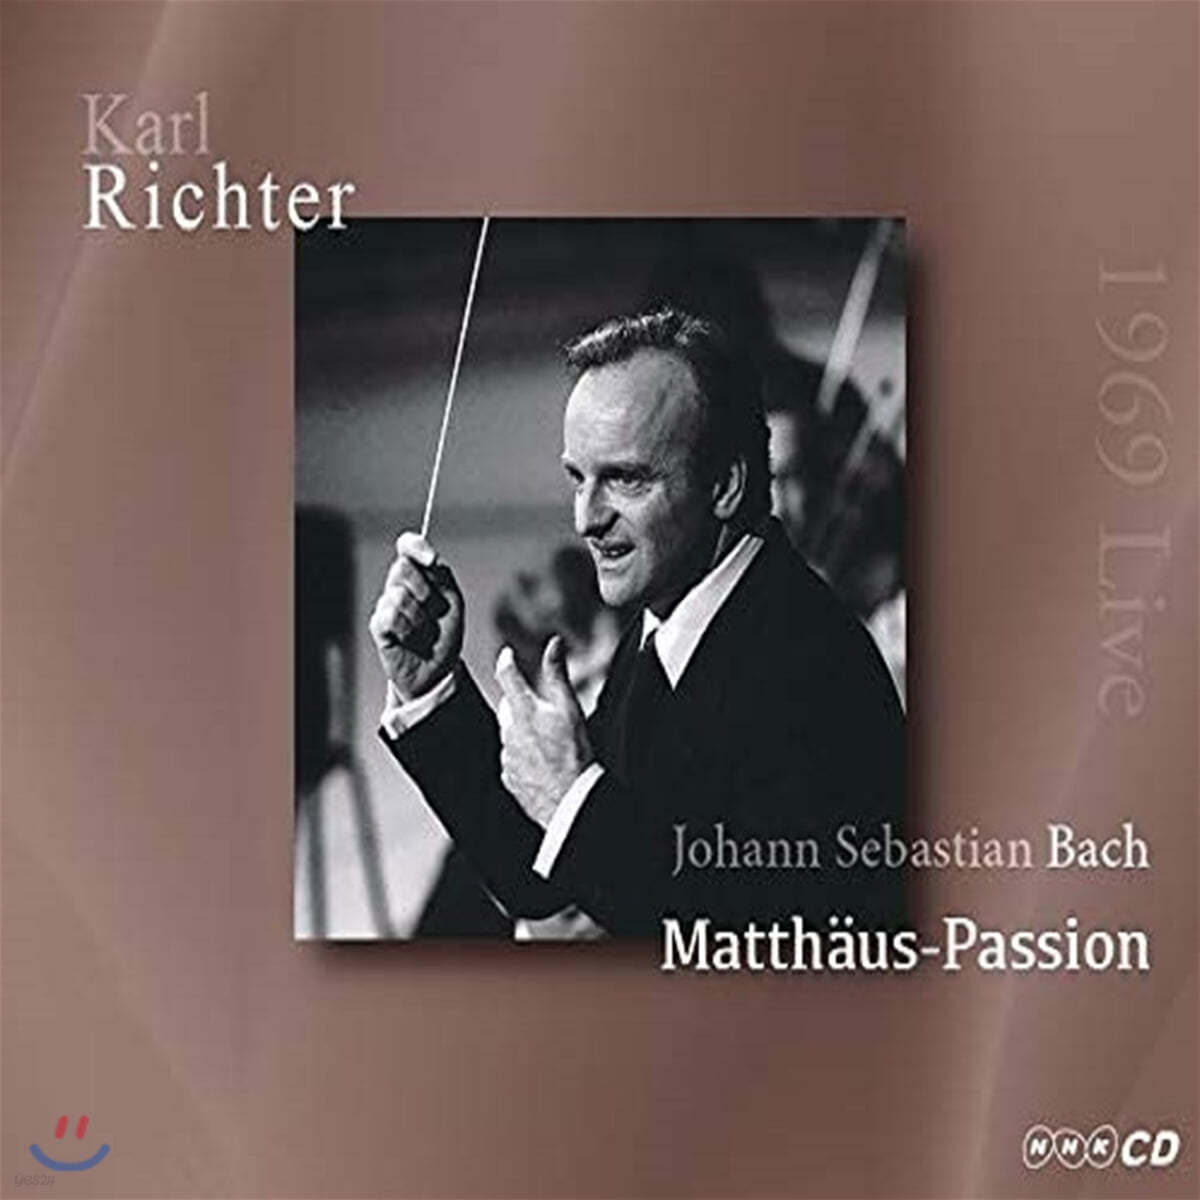 Karl Richter 바흐: 마태 수난곡 - 칼 리히터 (Bach: Matthew Passion BWV244)